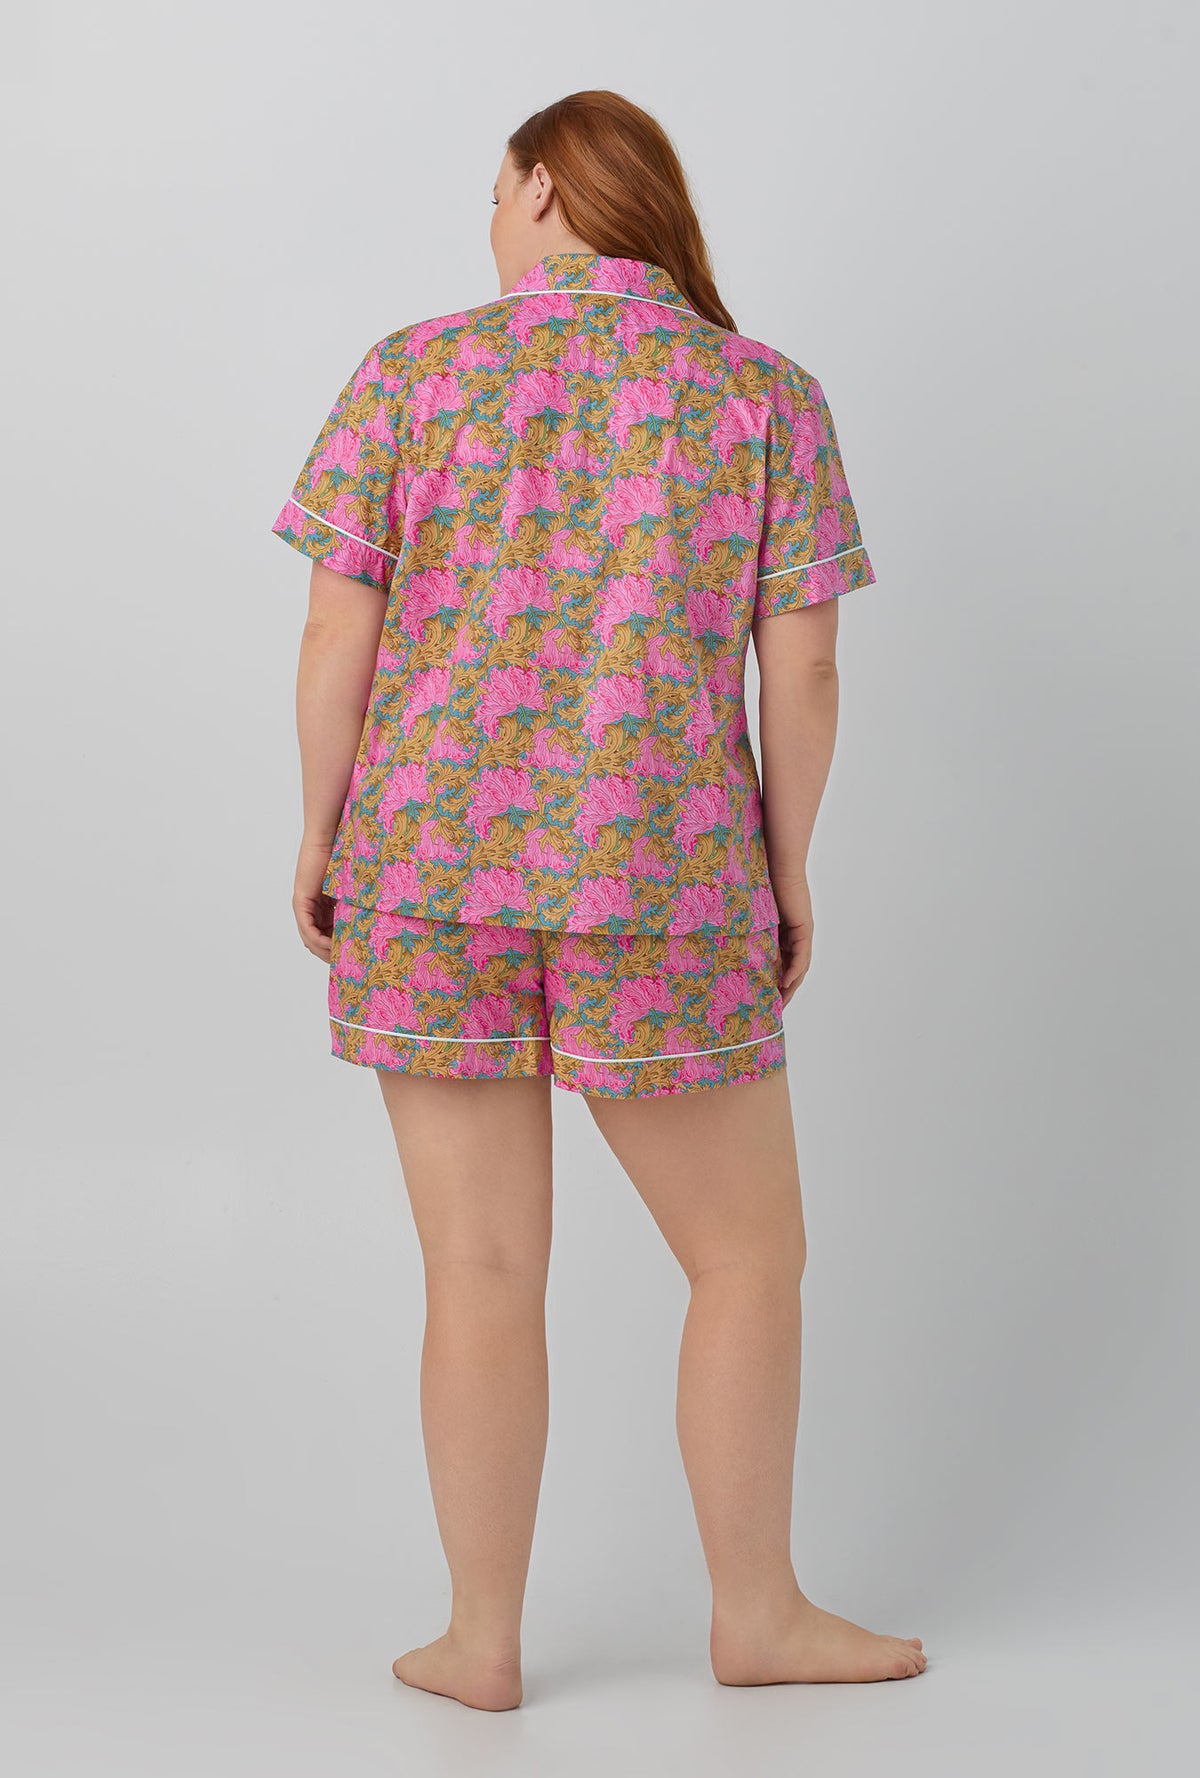 A lady wearing Follow The Sun Short Sleeve Classic Woven Cotton Tana Lawn® Shorty PJ Set Made with Liberty Fabrics